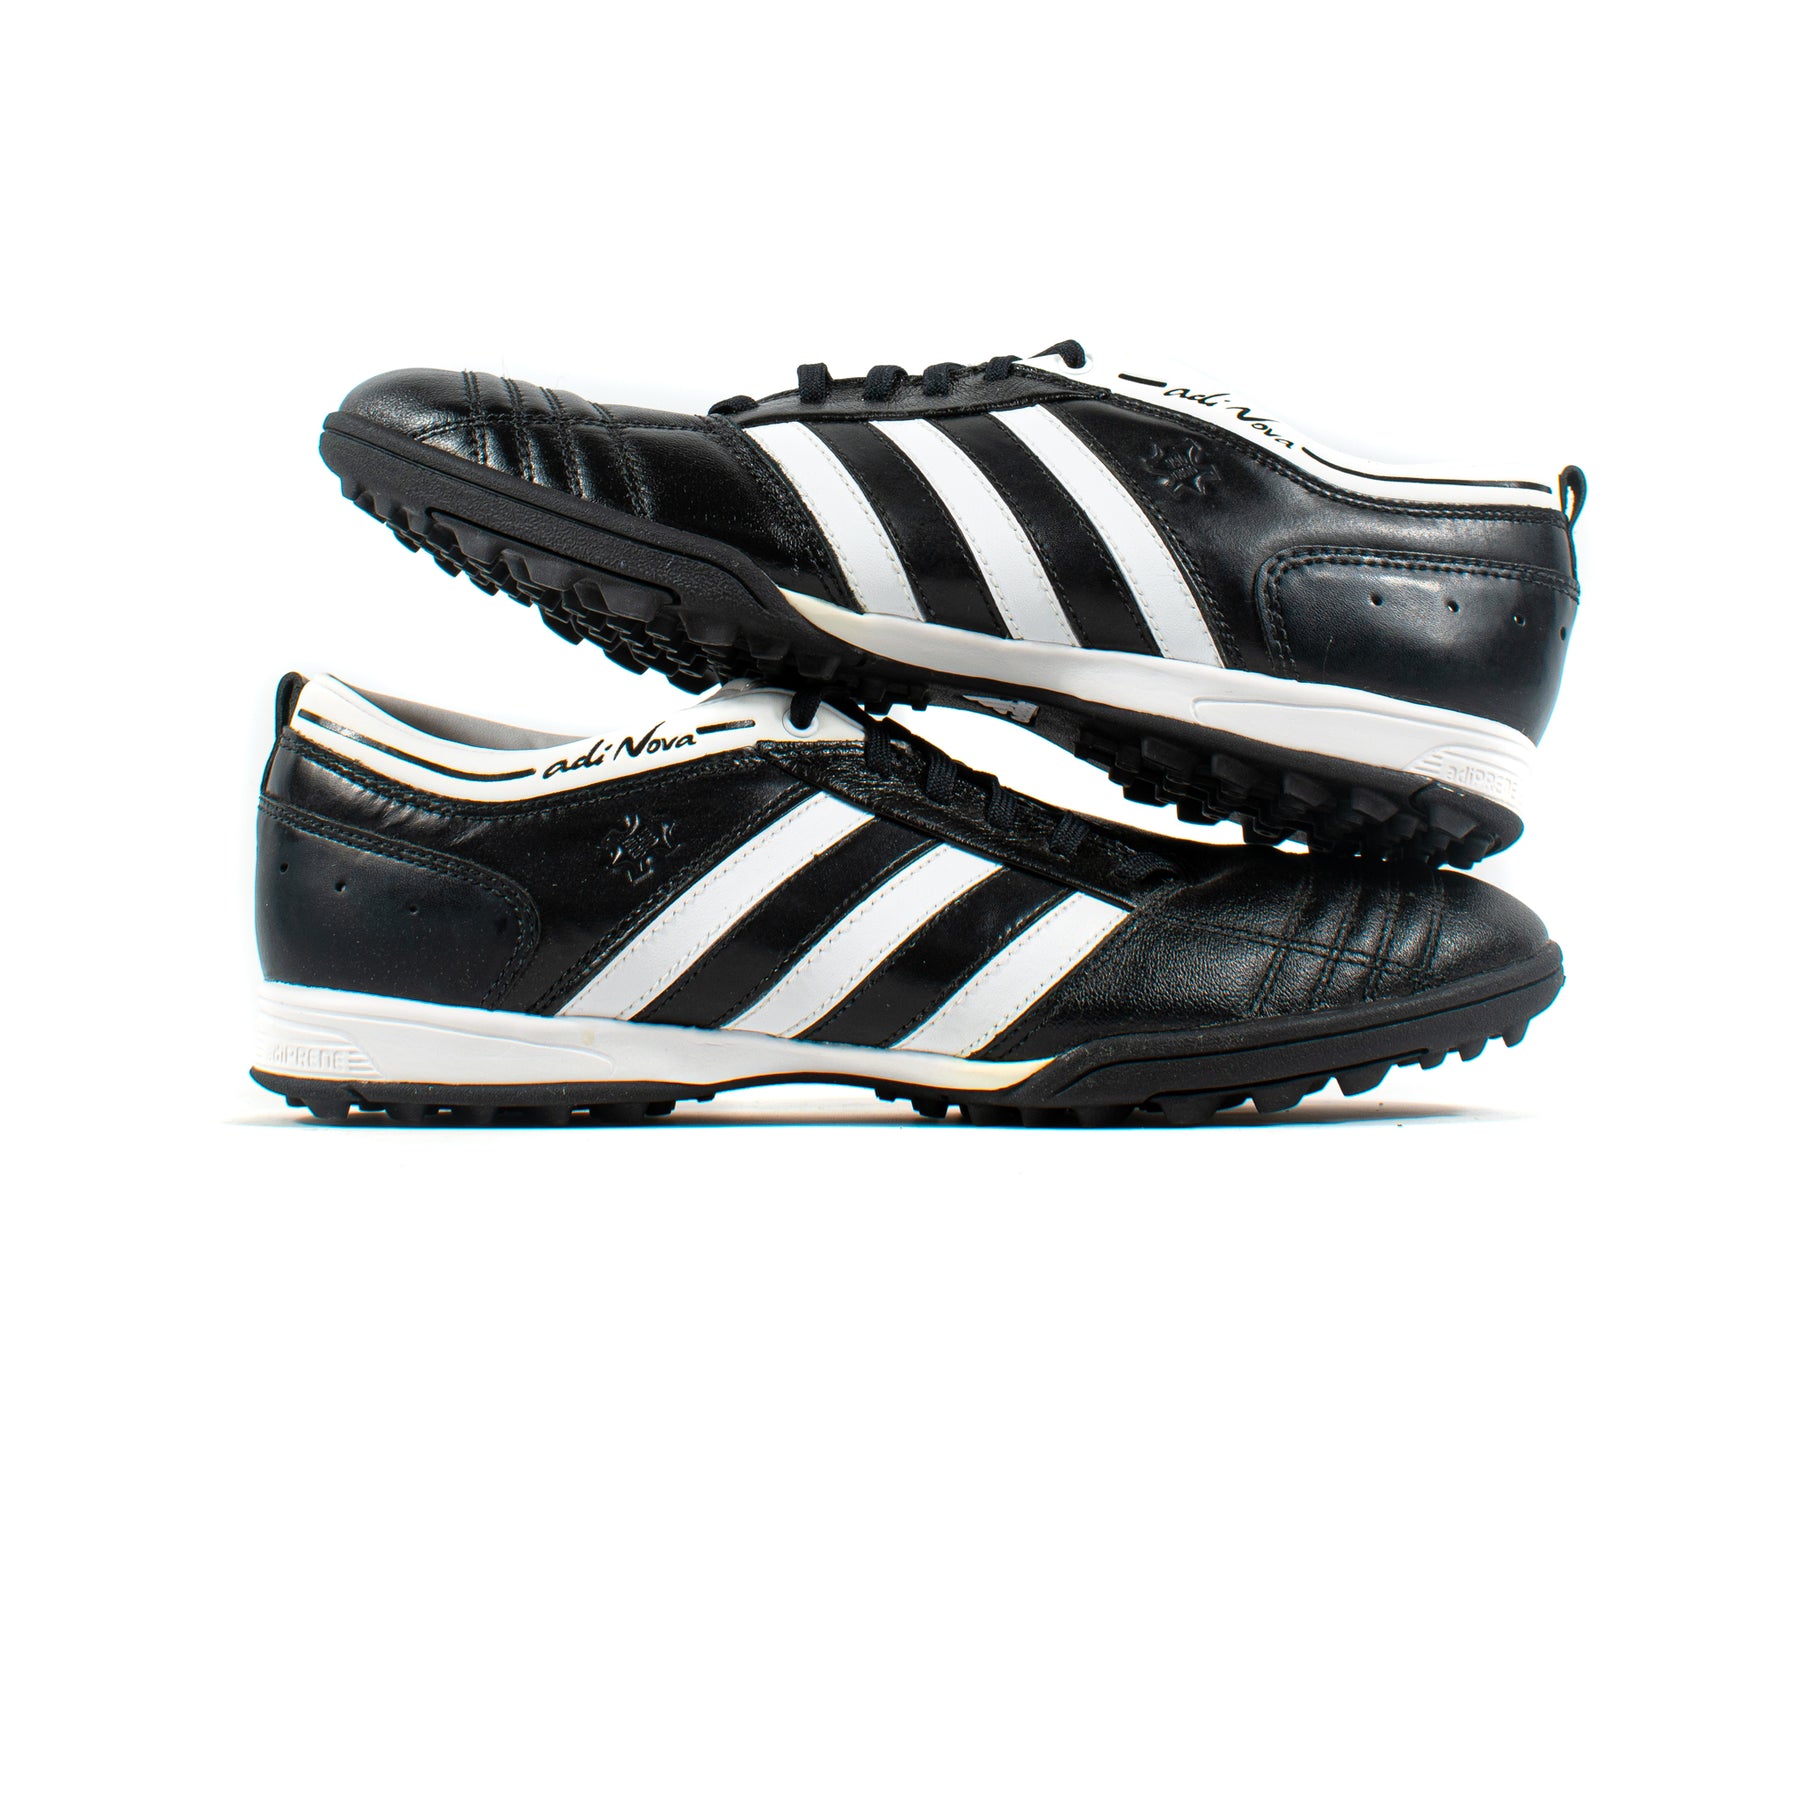 Adidas Black Turf – Classic Soccer Cleats